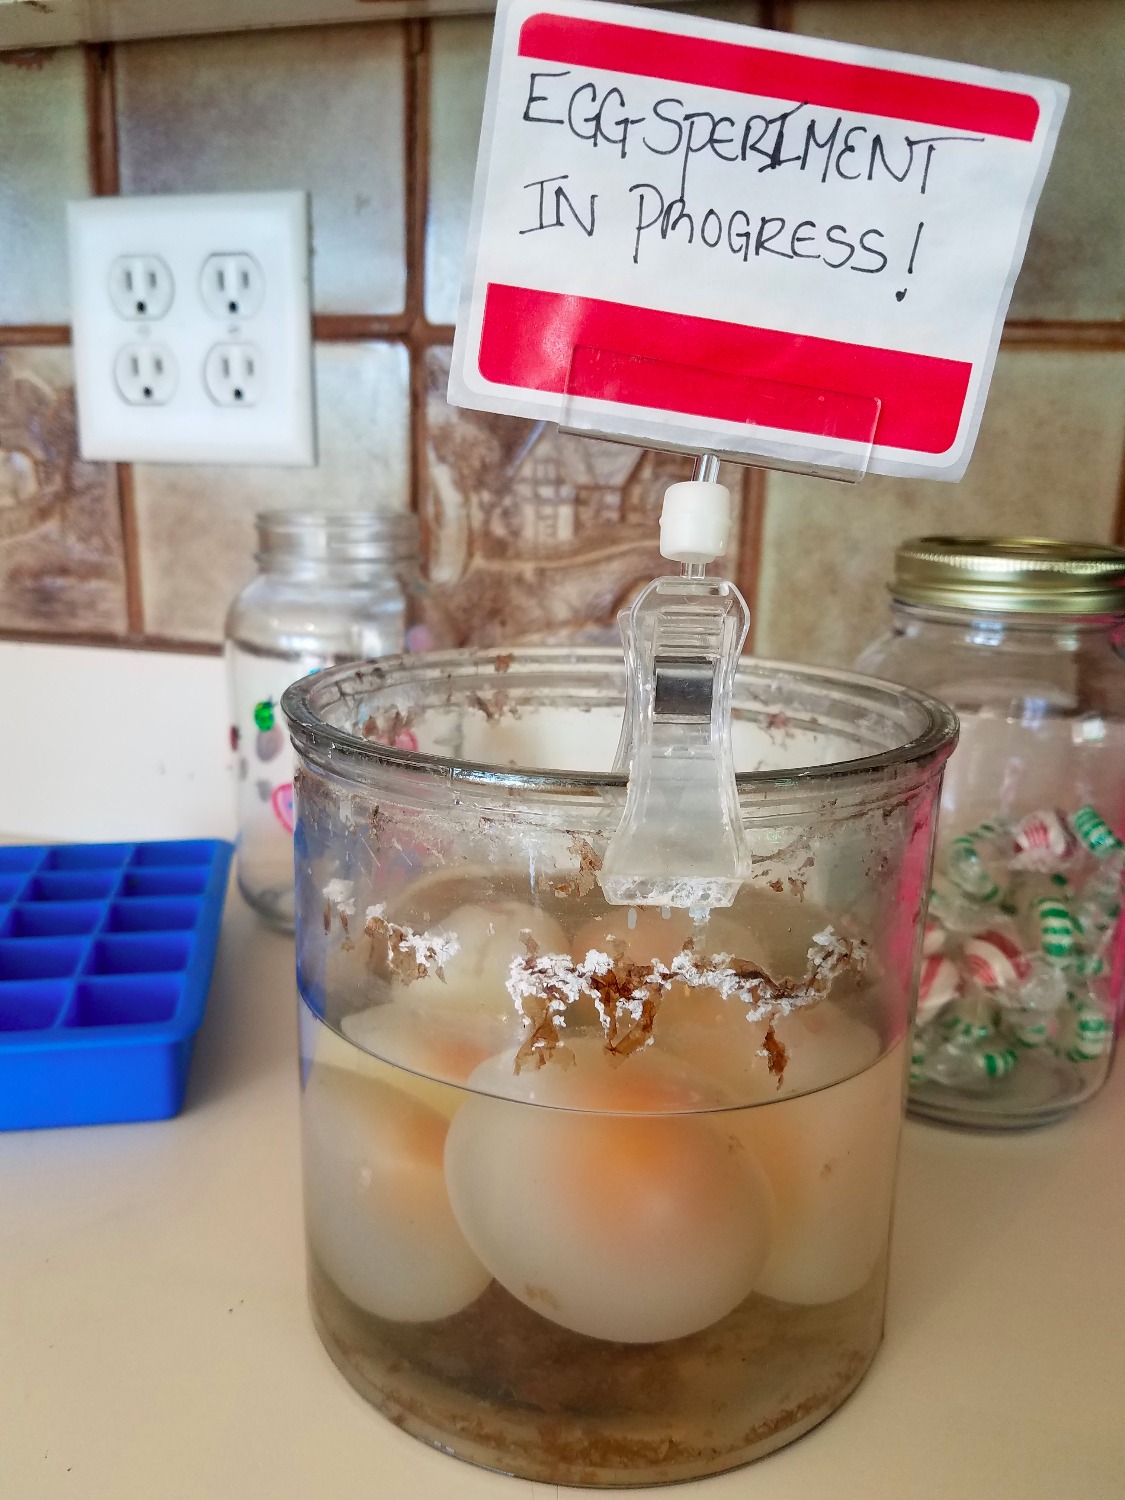 Eggs in a jar.